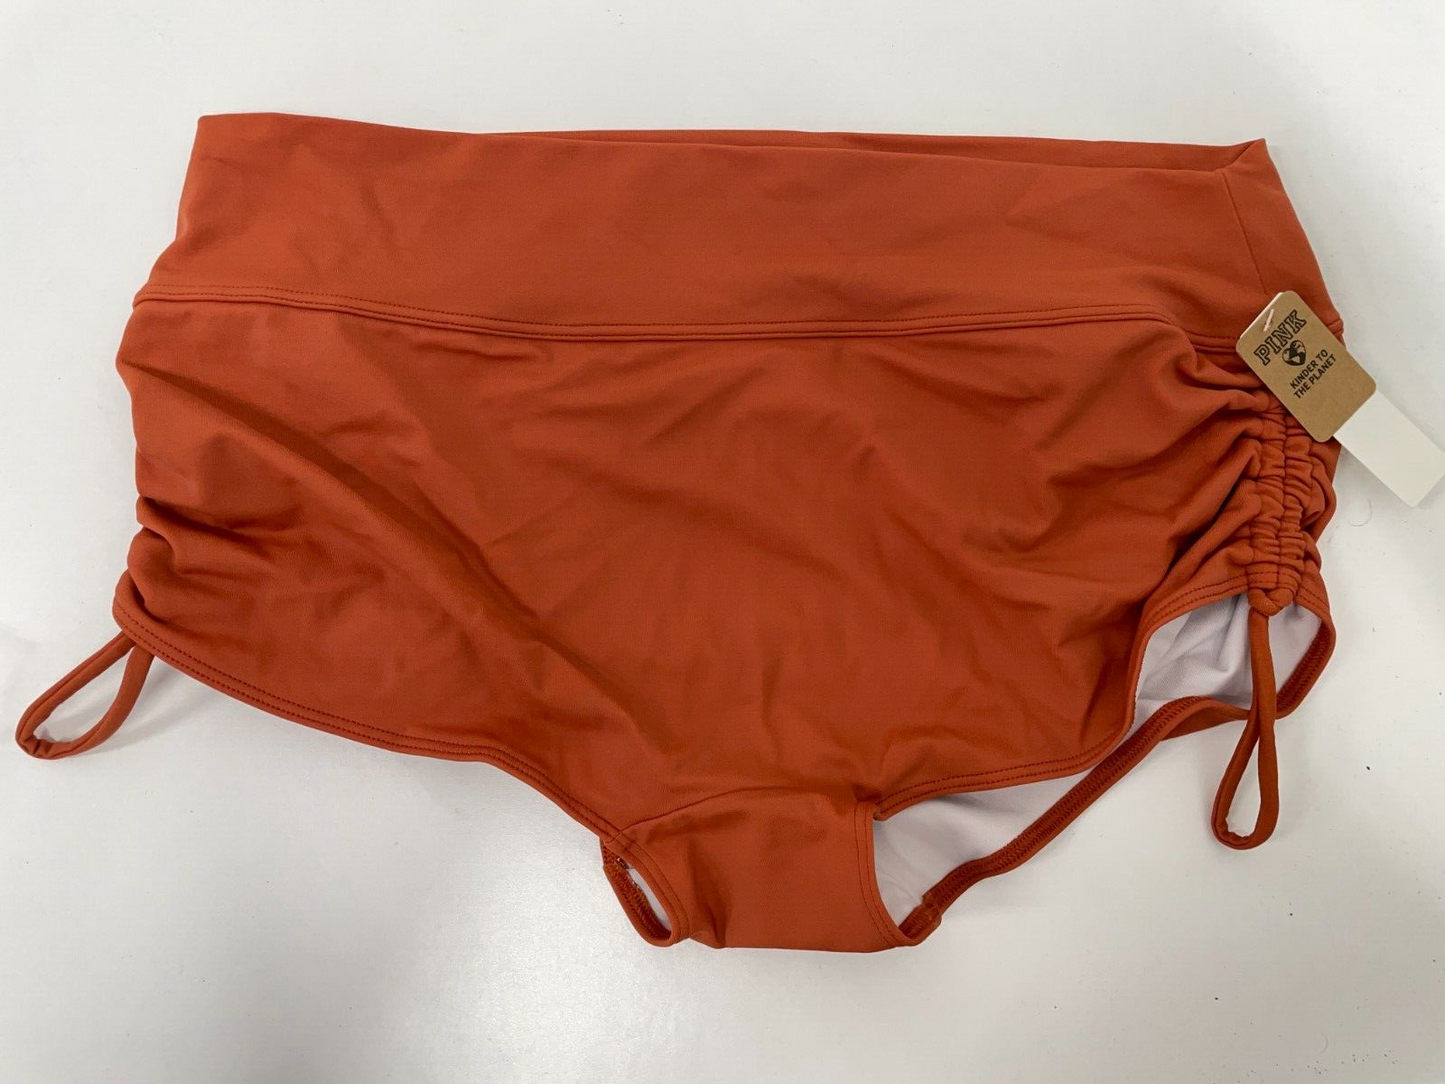 PINK Victoria's Secret Women's XL Shortie Bikini Bottom Amber Clay 11199799 NWT